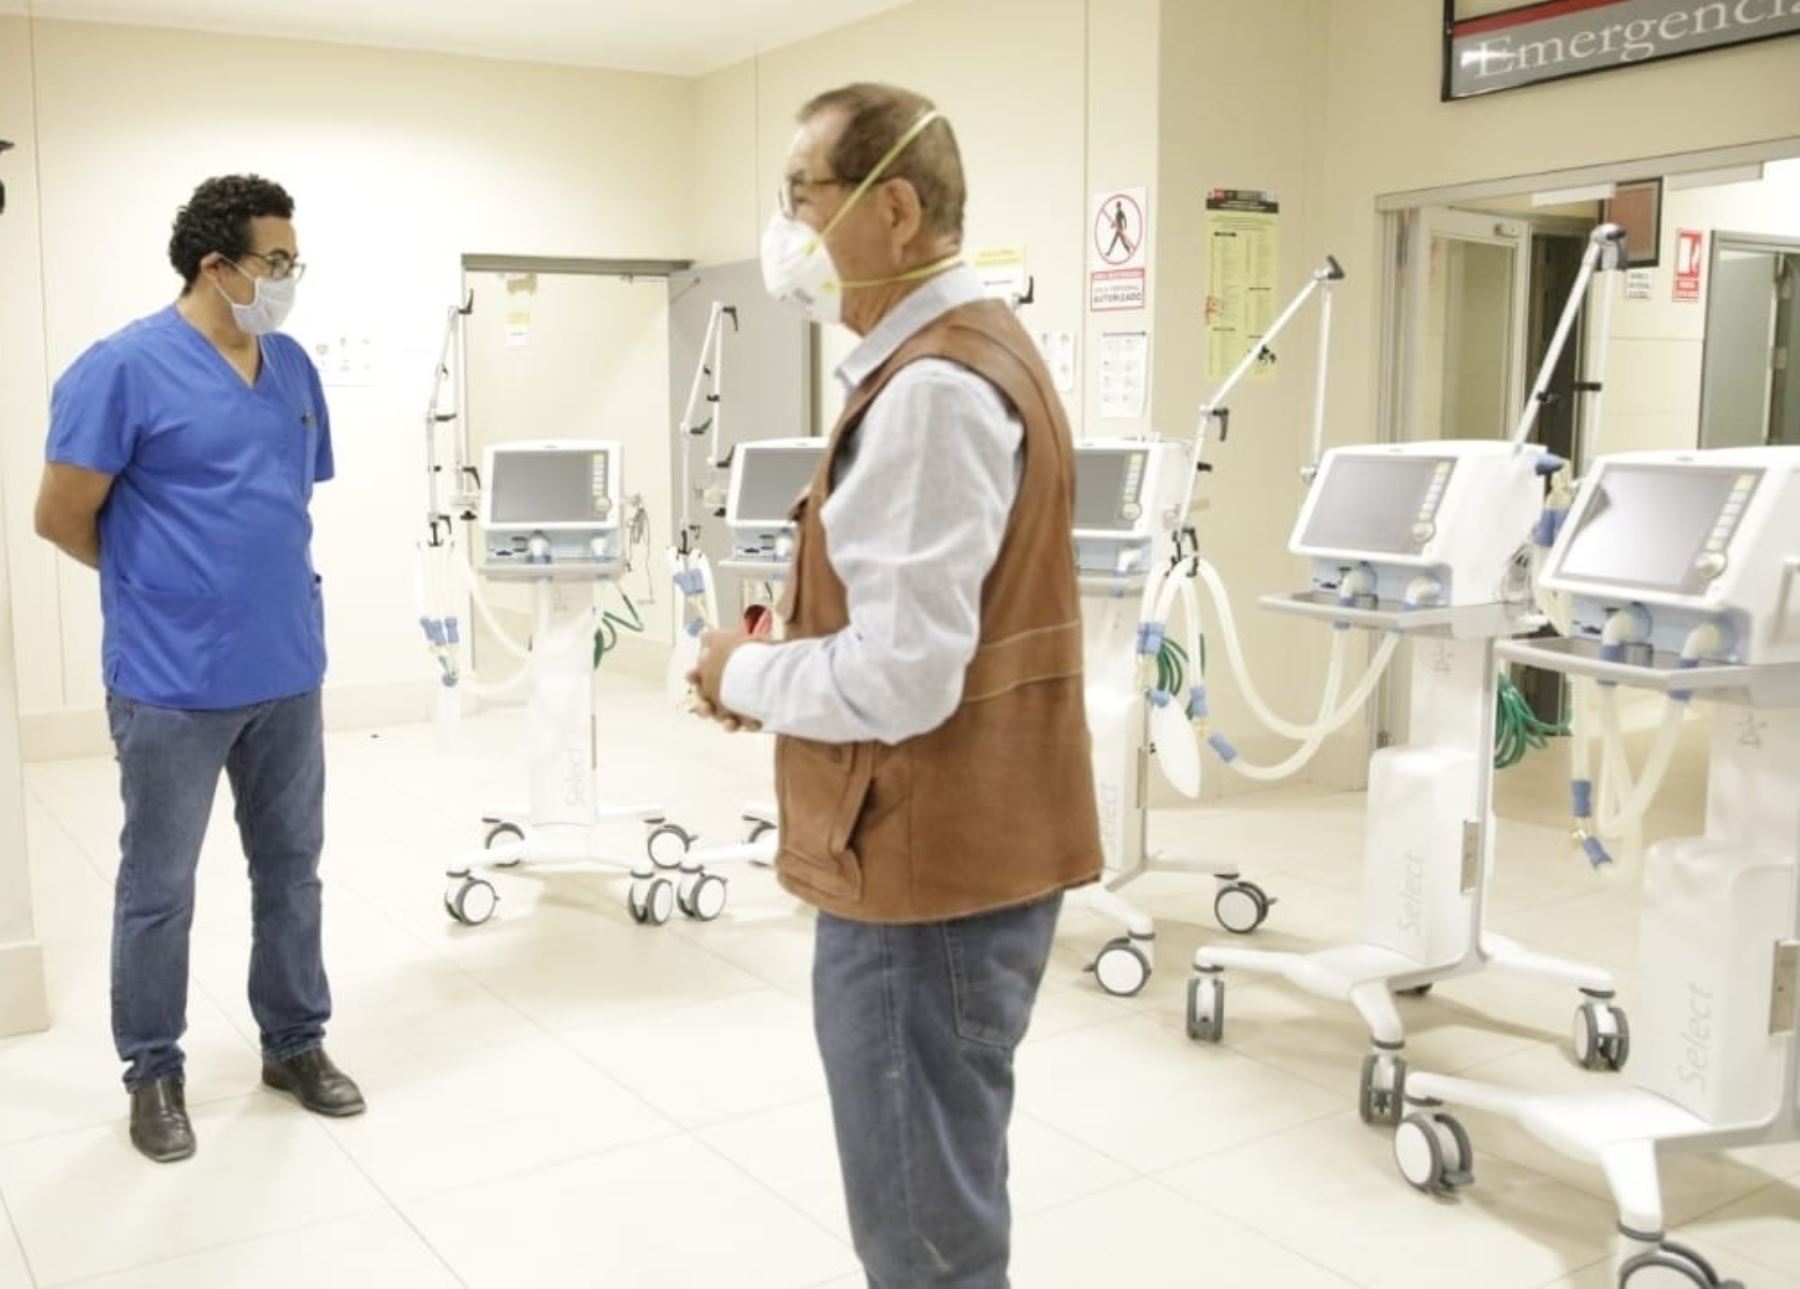 Gobierno Regional de San Martín entrega cinco ventiladores mecánicos al Hospital de Moyobamba para garantizar atención a pacientes graves afectados por el coronavirus (covid-19). ANDINA/Difusión